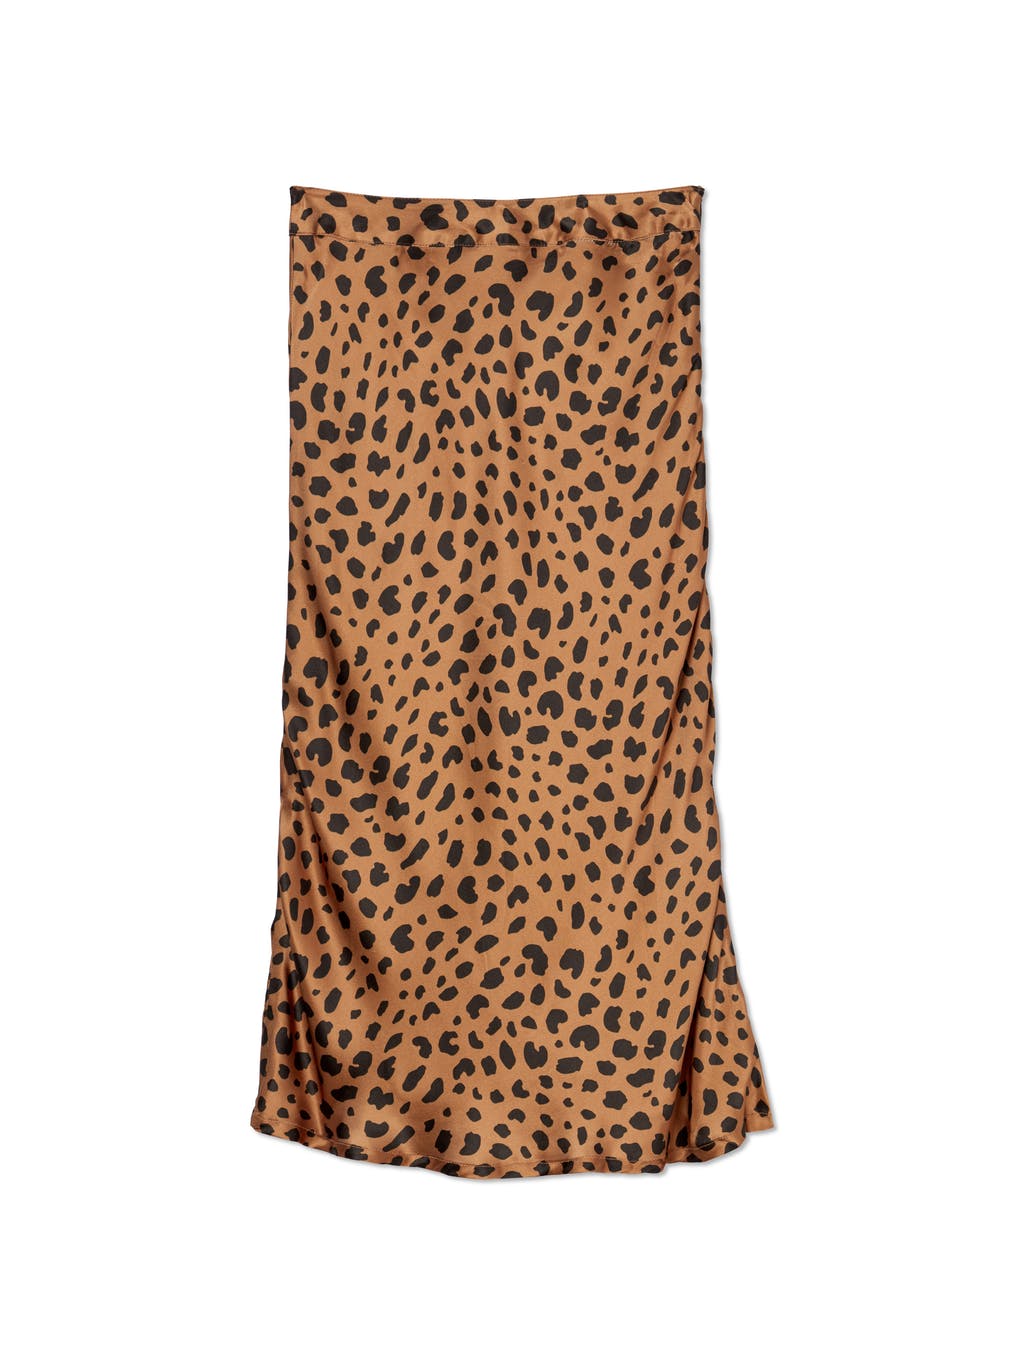 Bank St Leopard Midi Skirt